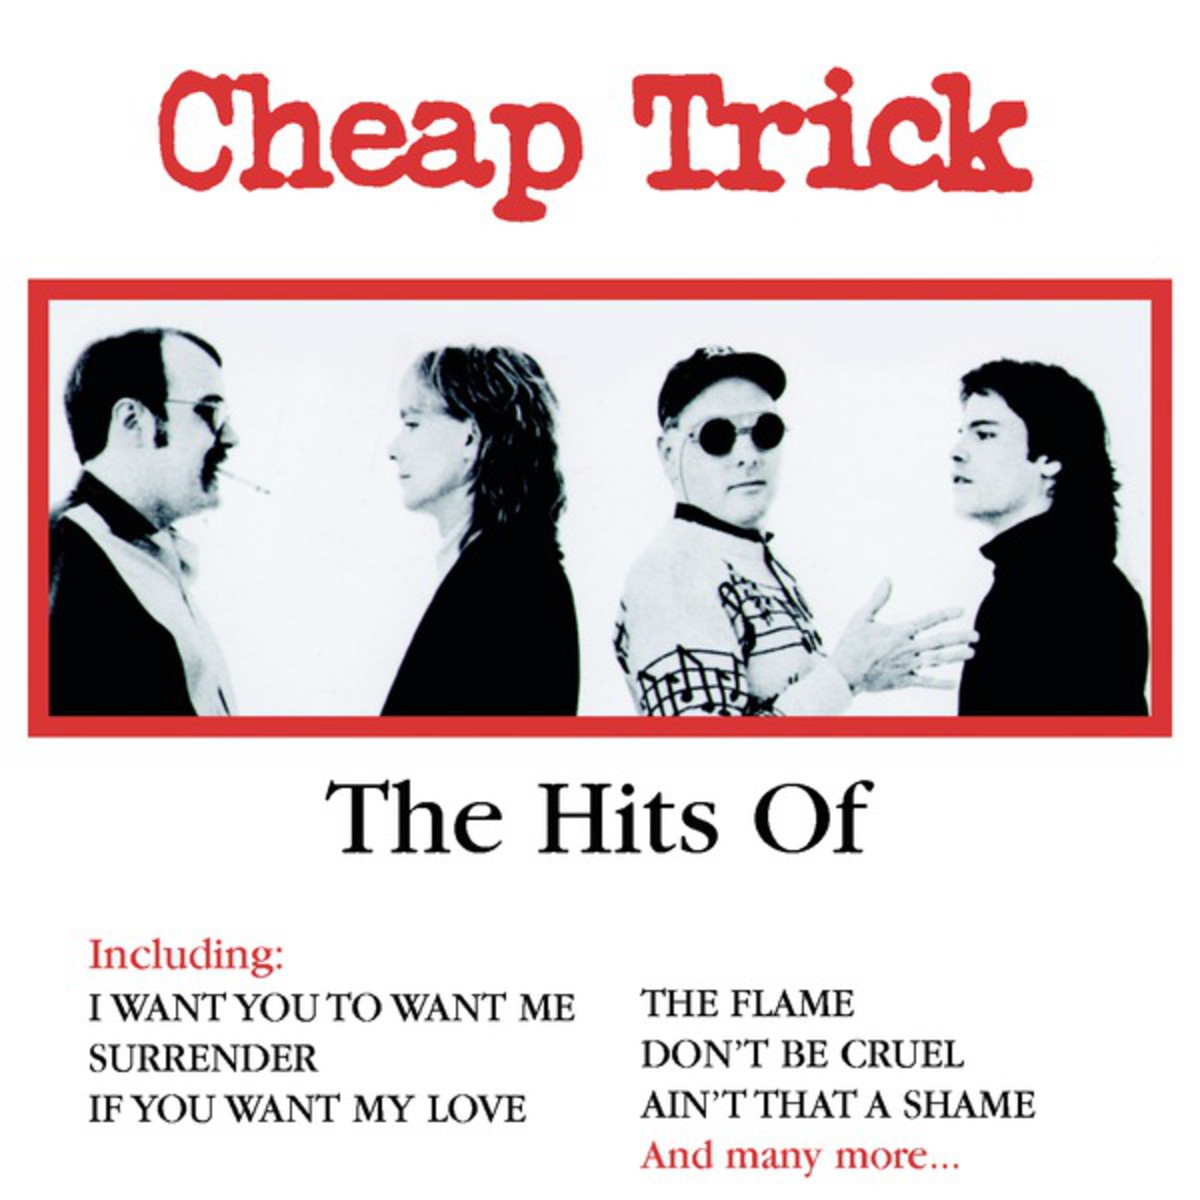 Cheap trick - the flame lyrics